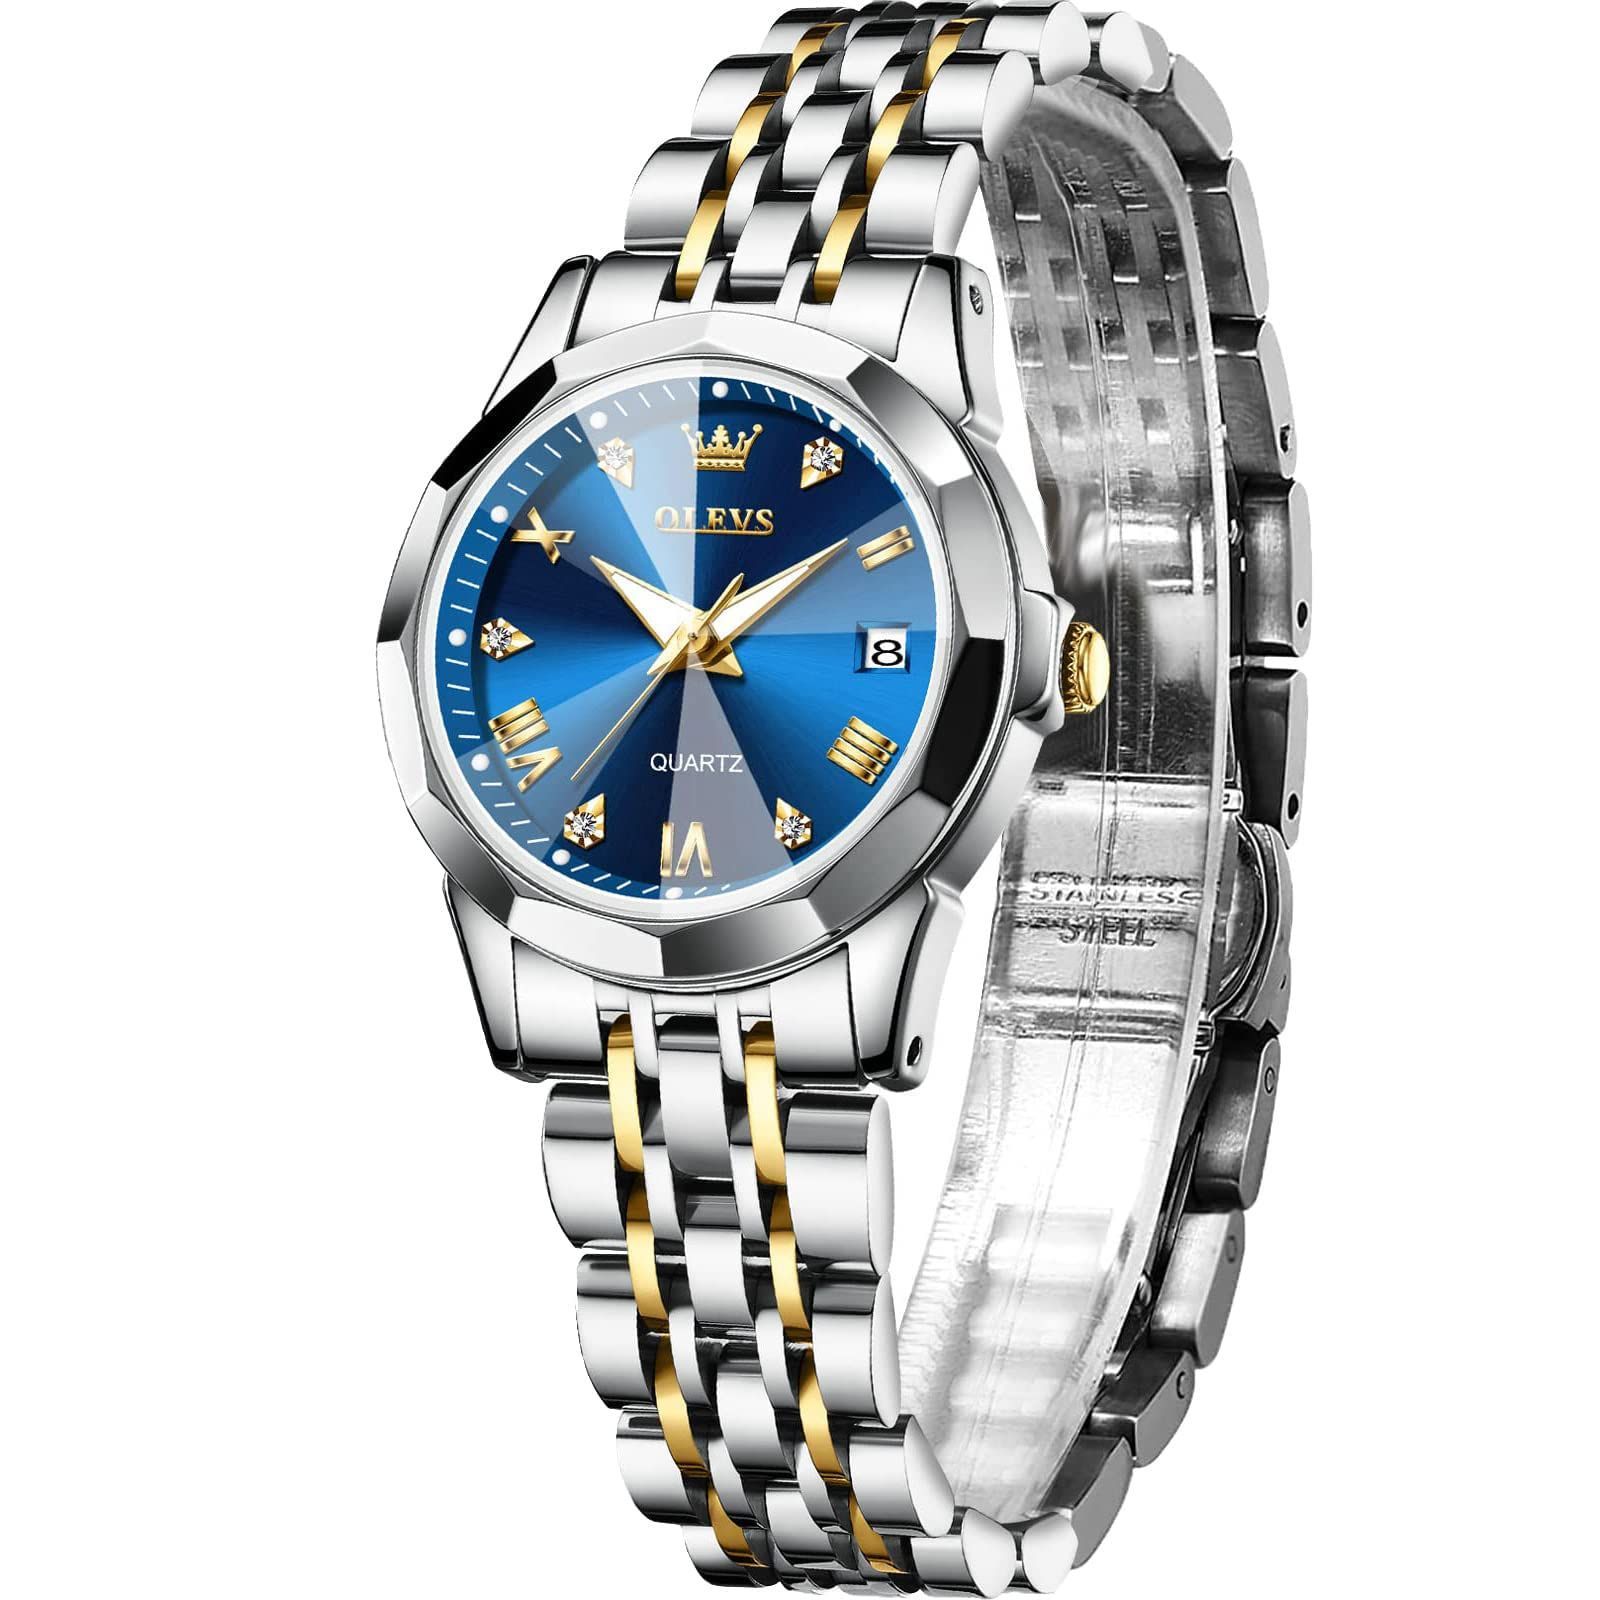 OLEVS 人気腕時計 レディース 防水 ステンレスバンド 女性用とけい腕時計 かわいい 日付 うで時計 レディース ダイヤモンド アナログクオーツ腕時計 プレゼント Watch for WOMEN おしゃれ女性腕時計 ブルー 文字盤